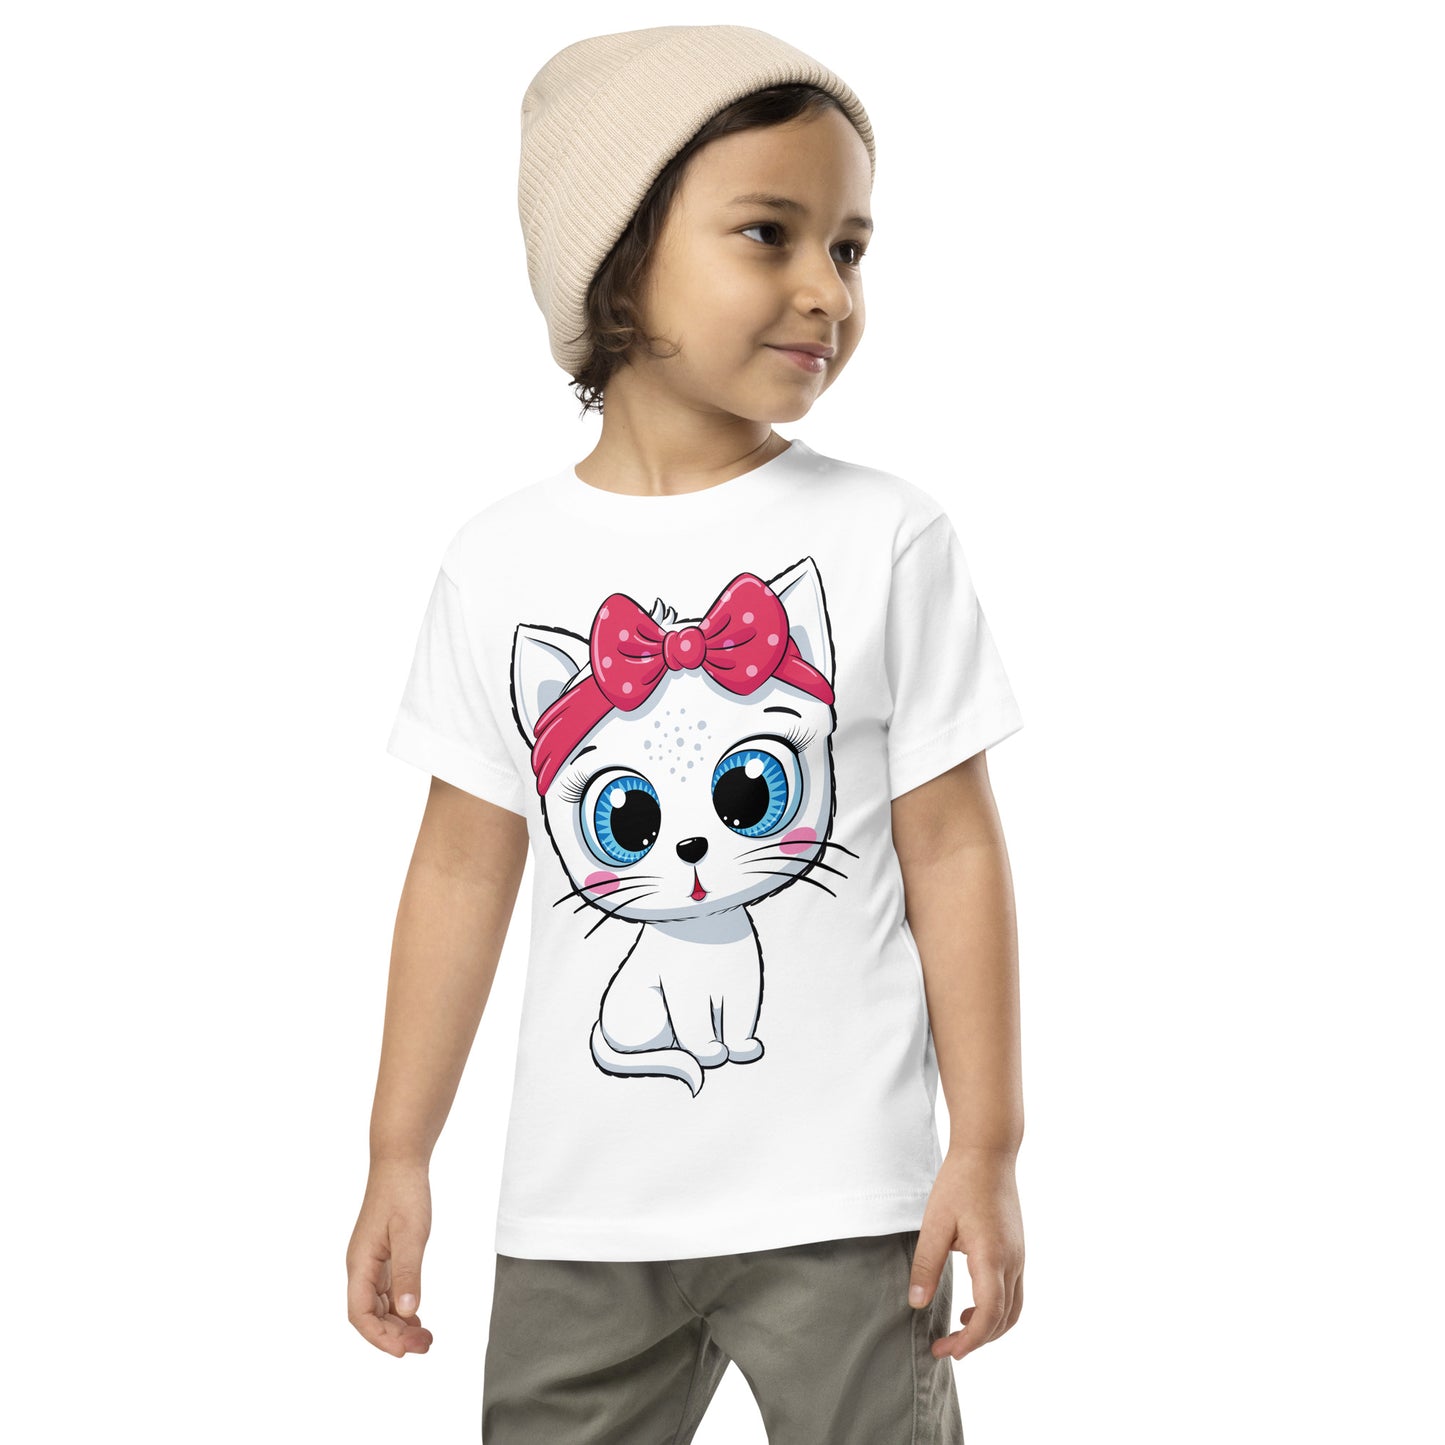 Cute Baby Kitty Cat T-shirt, No. 0275